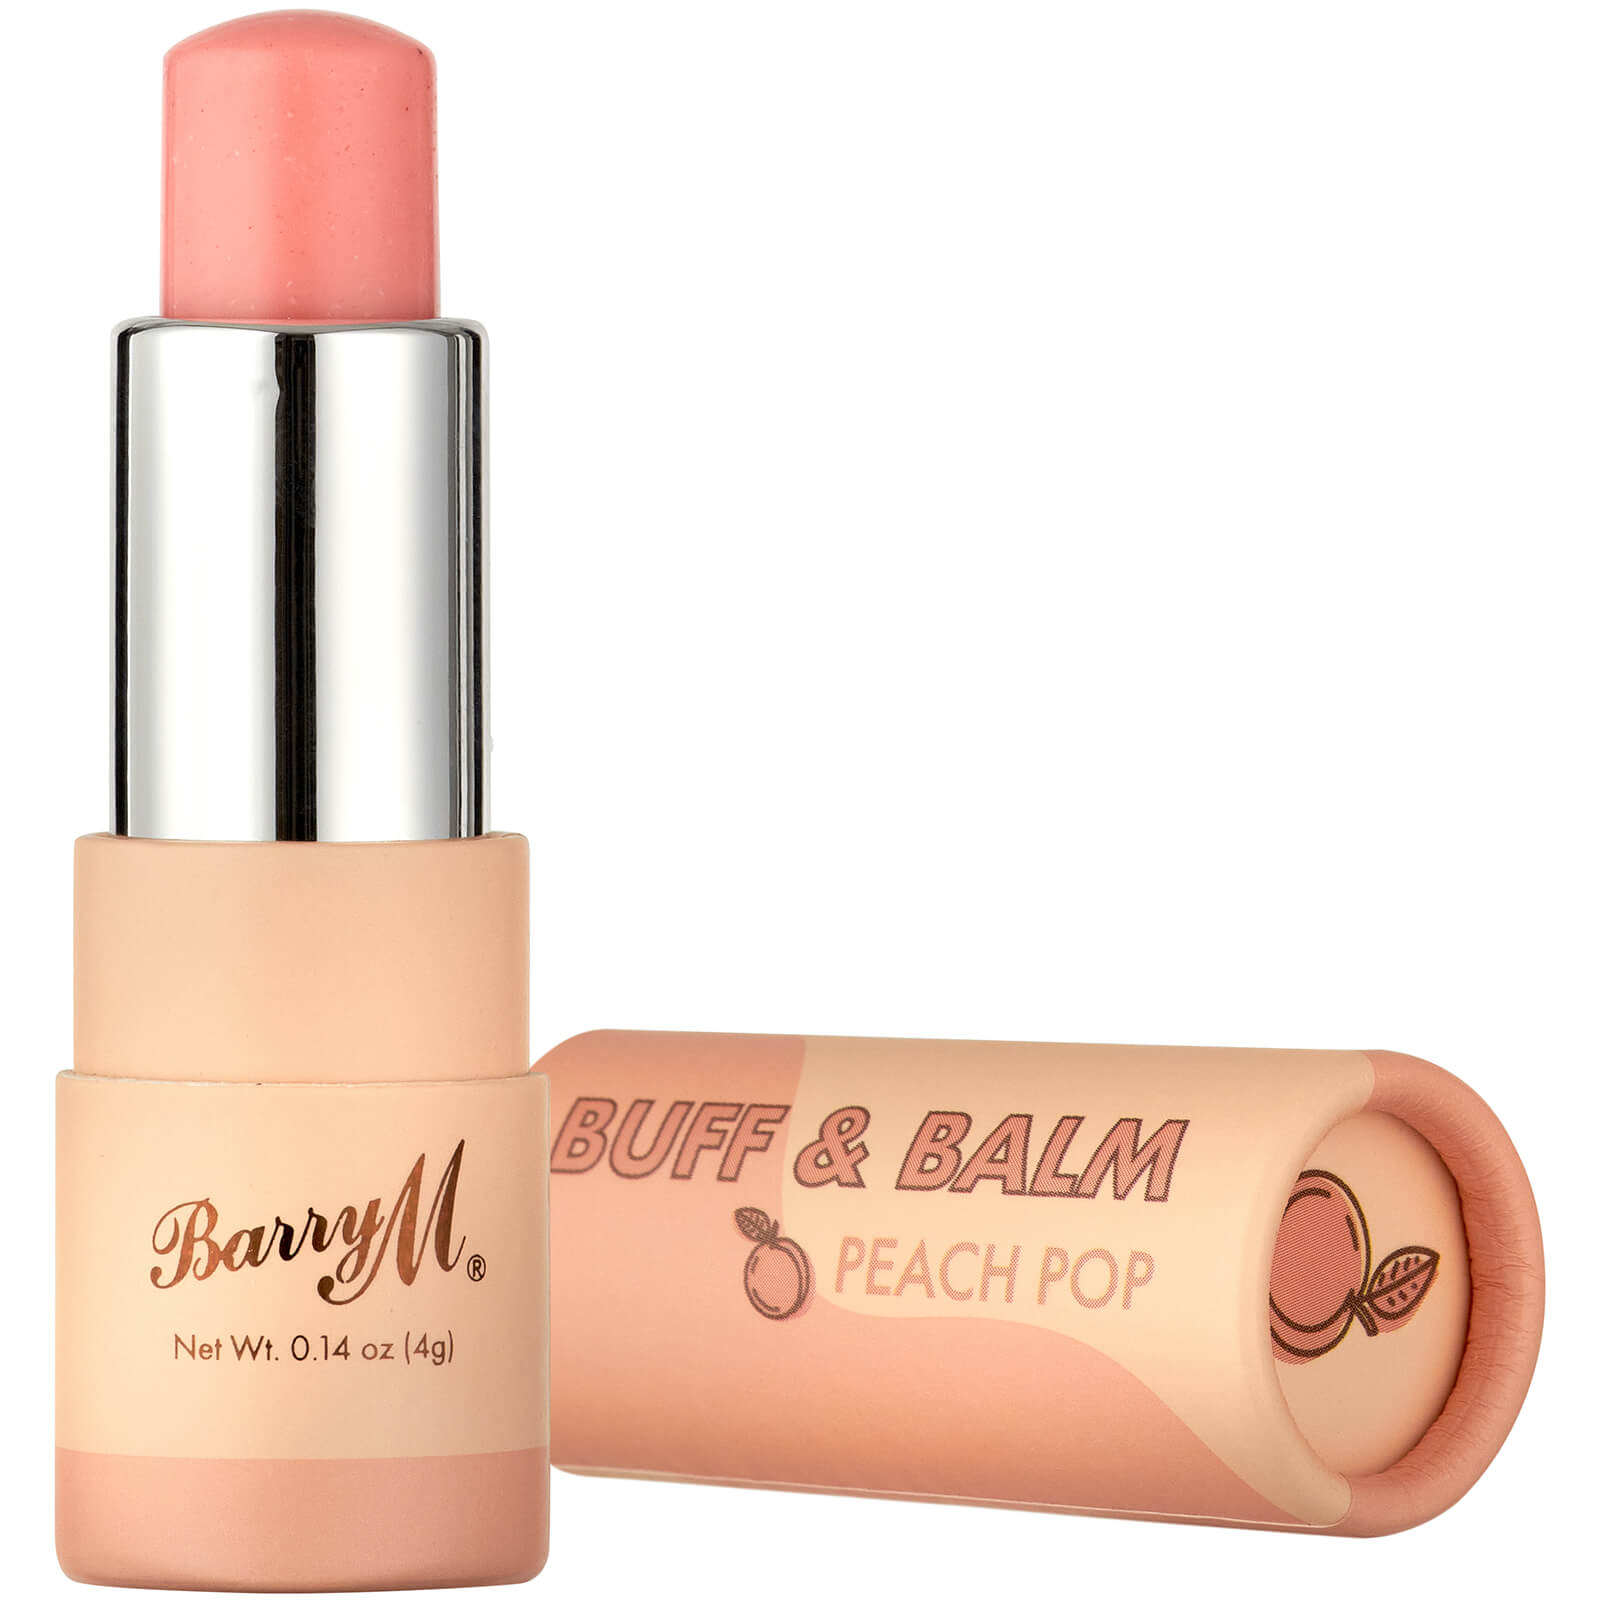 Barry M Cosmetics Buff and Balm 4g (Various Shades) - Peach Pop